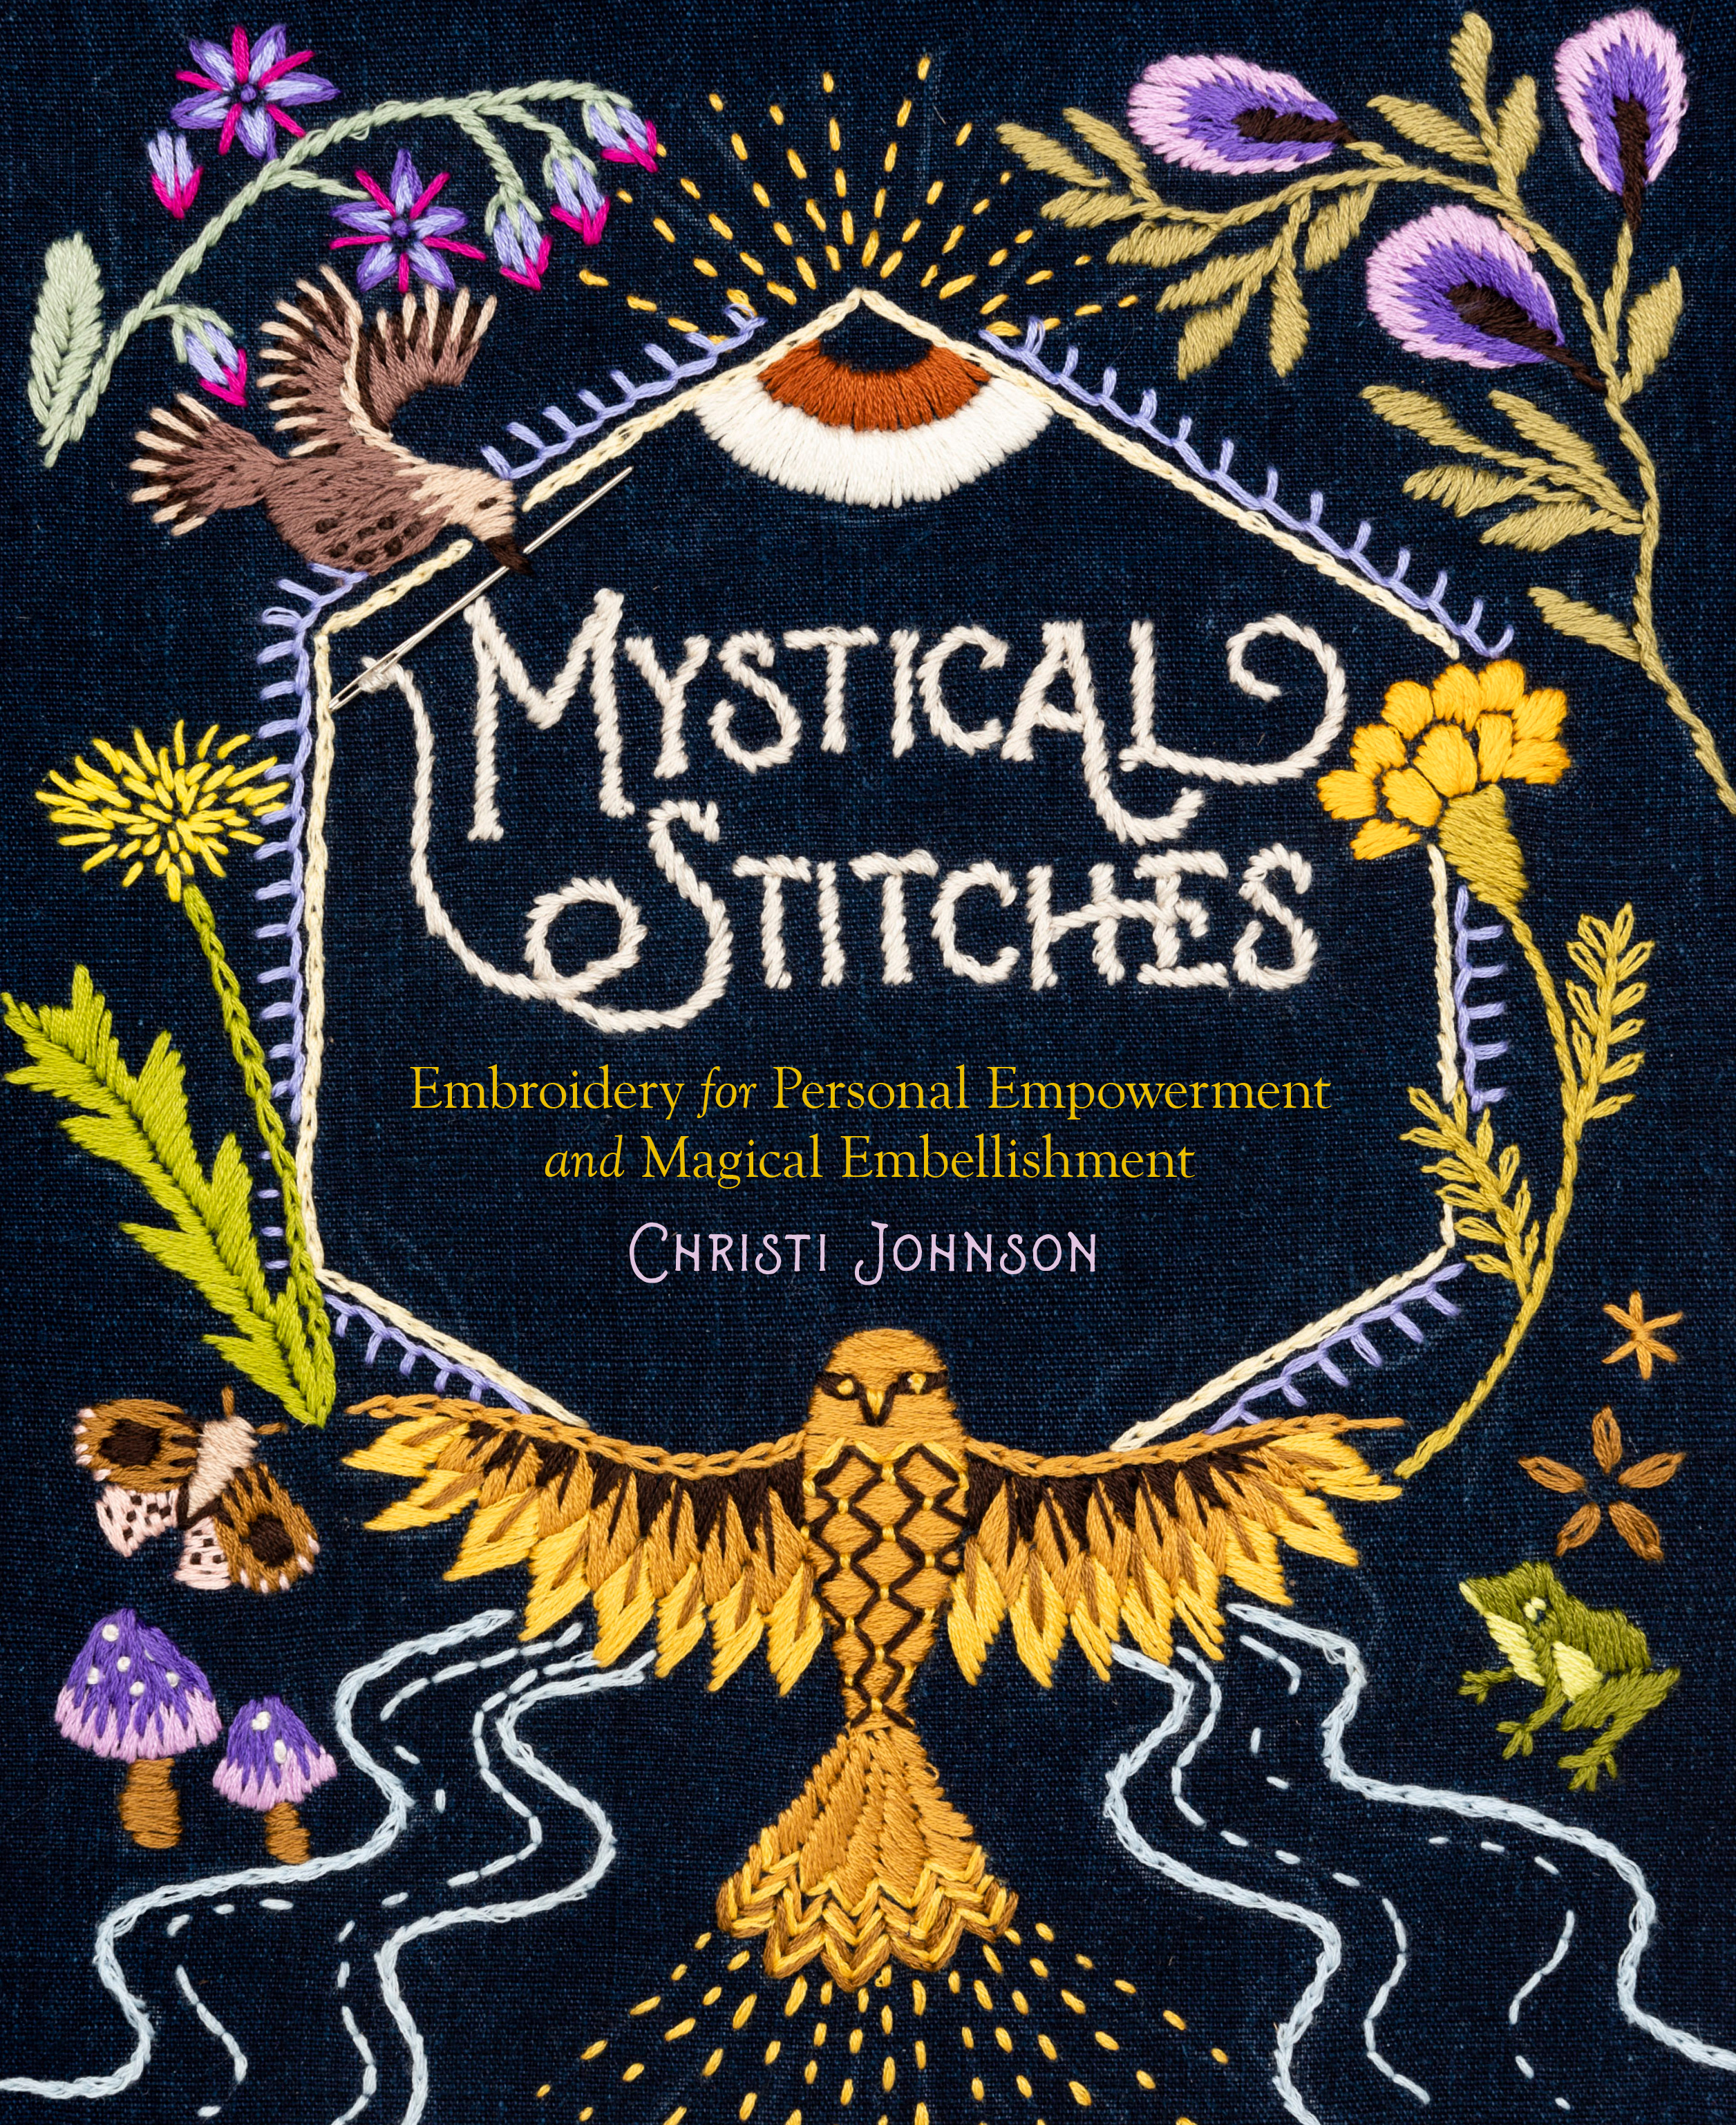 Book　Christi　Mystical　Hachette　Johnson　Stitches　by　Group